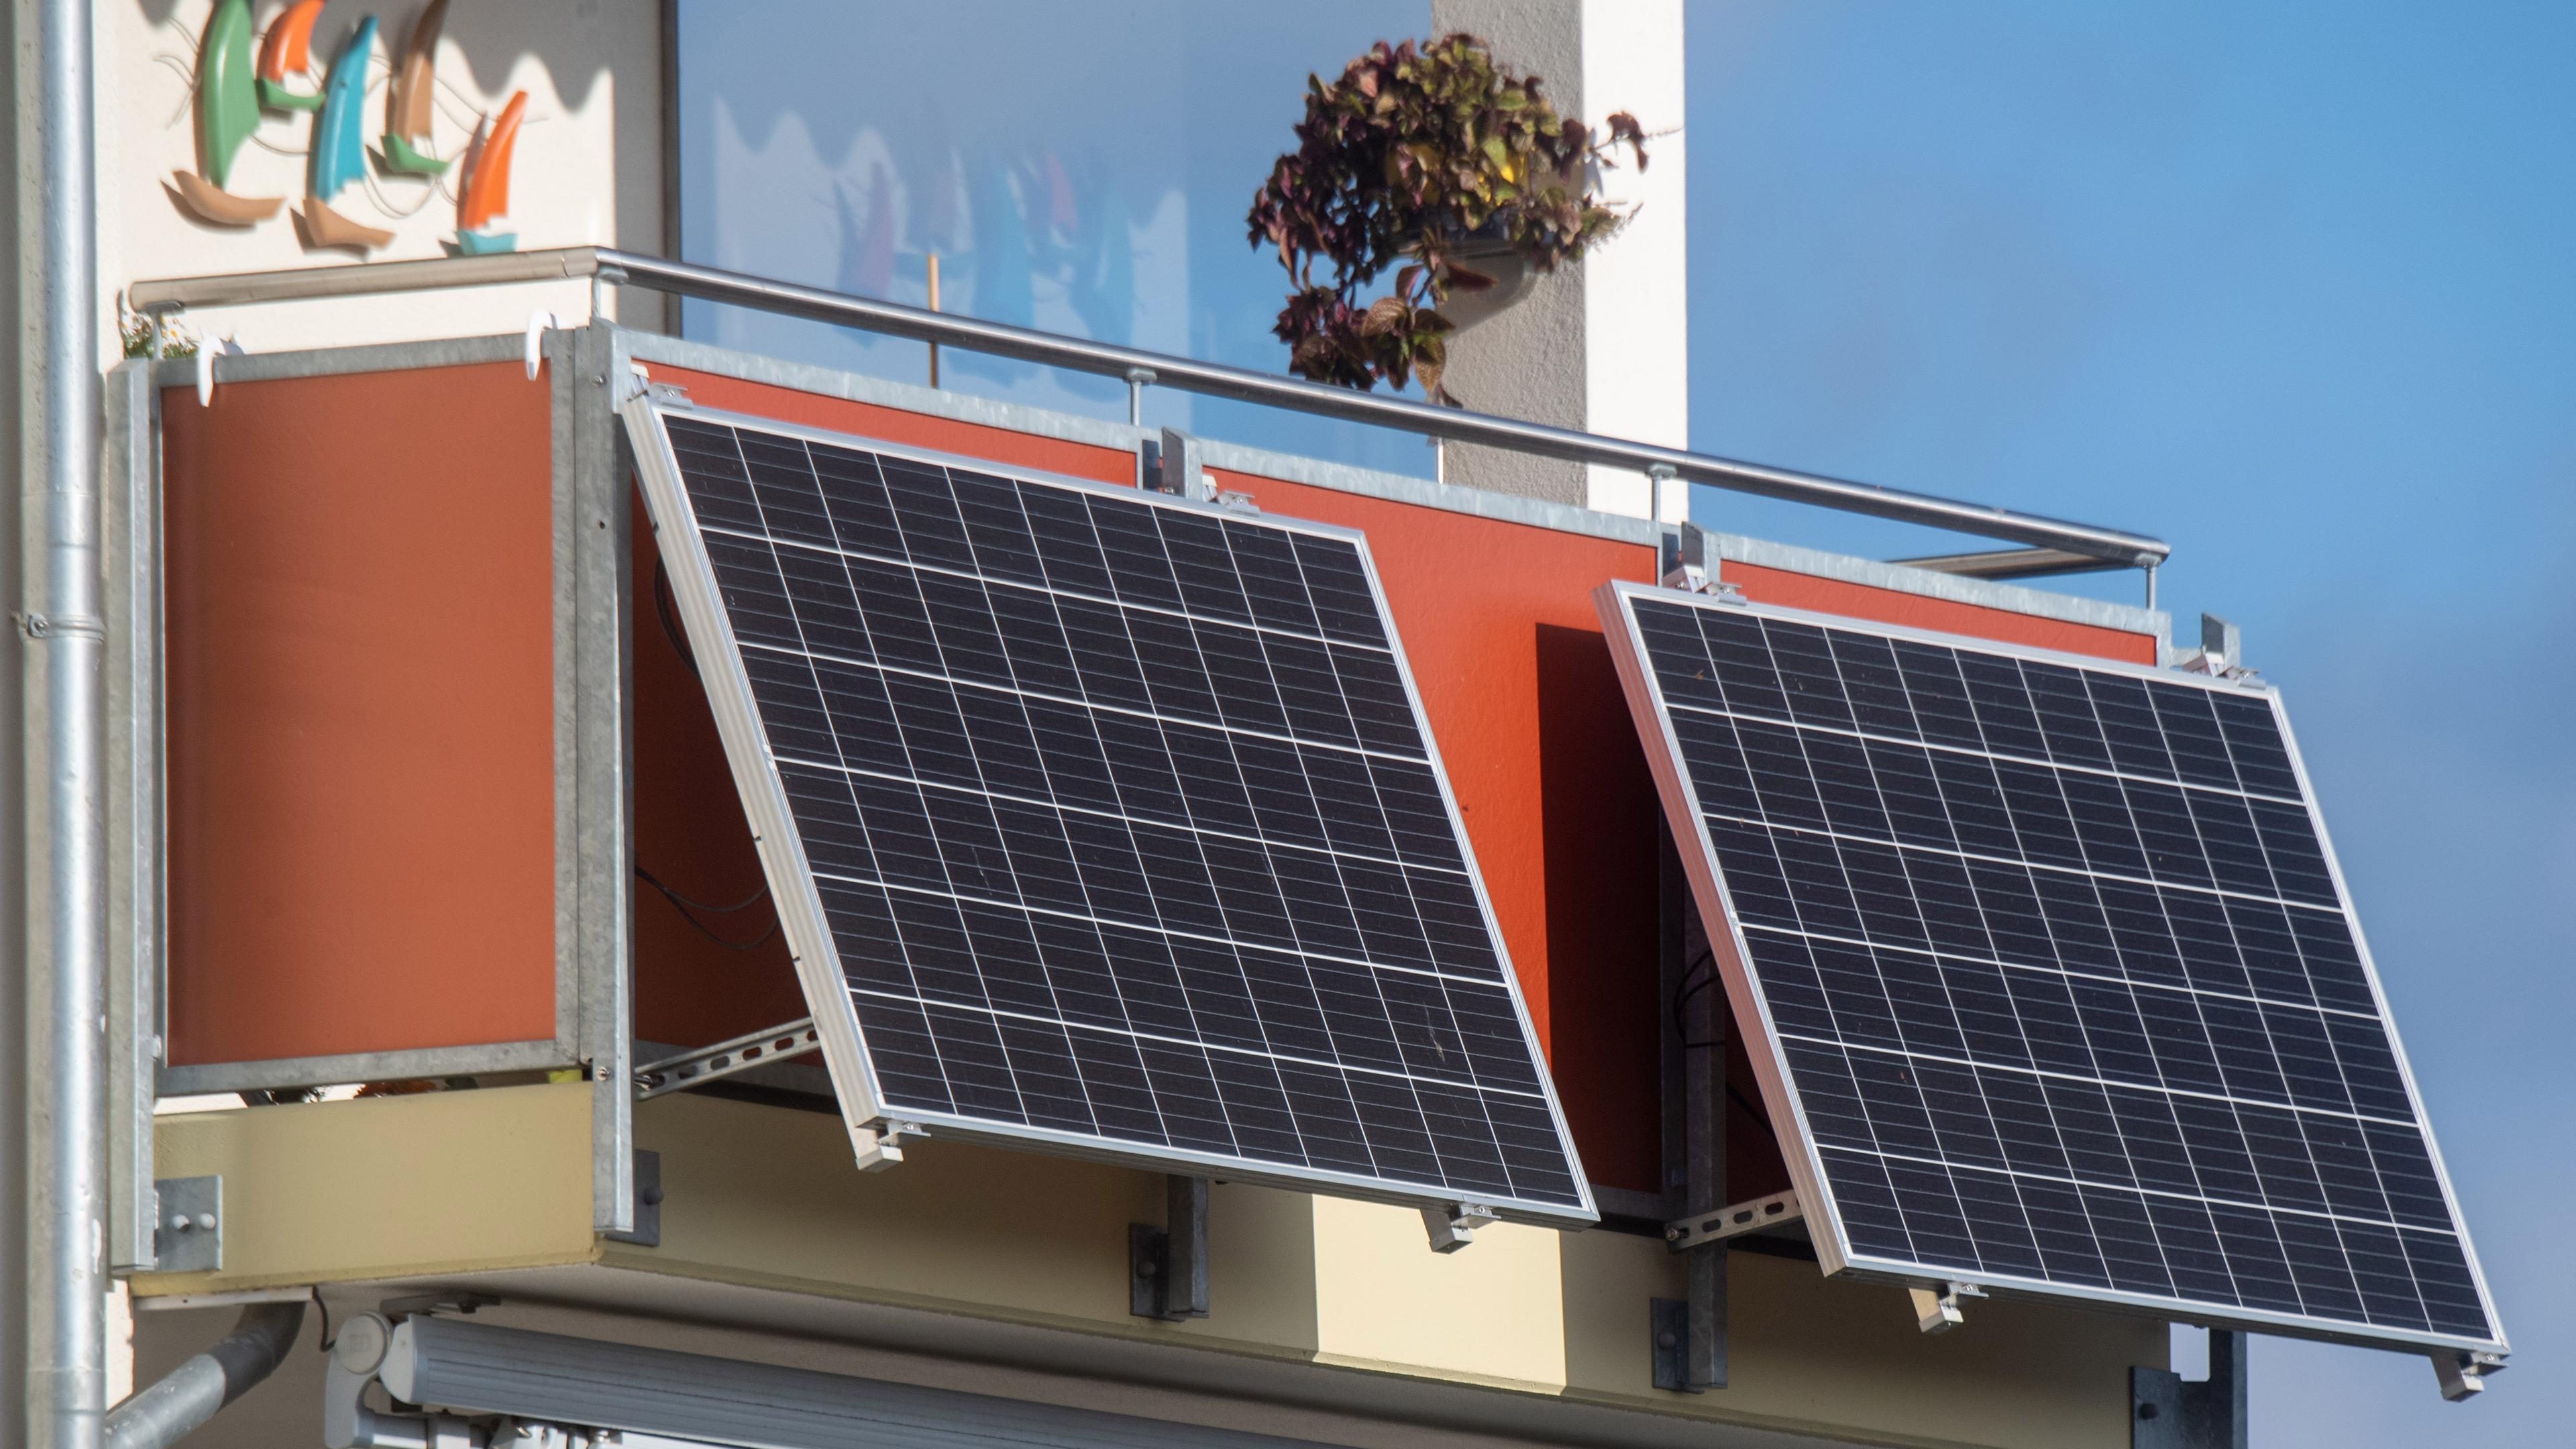 Mini-Photovoltaik: Stromsparen mit kleinen Solaranlagen - ZDFheute